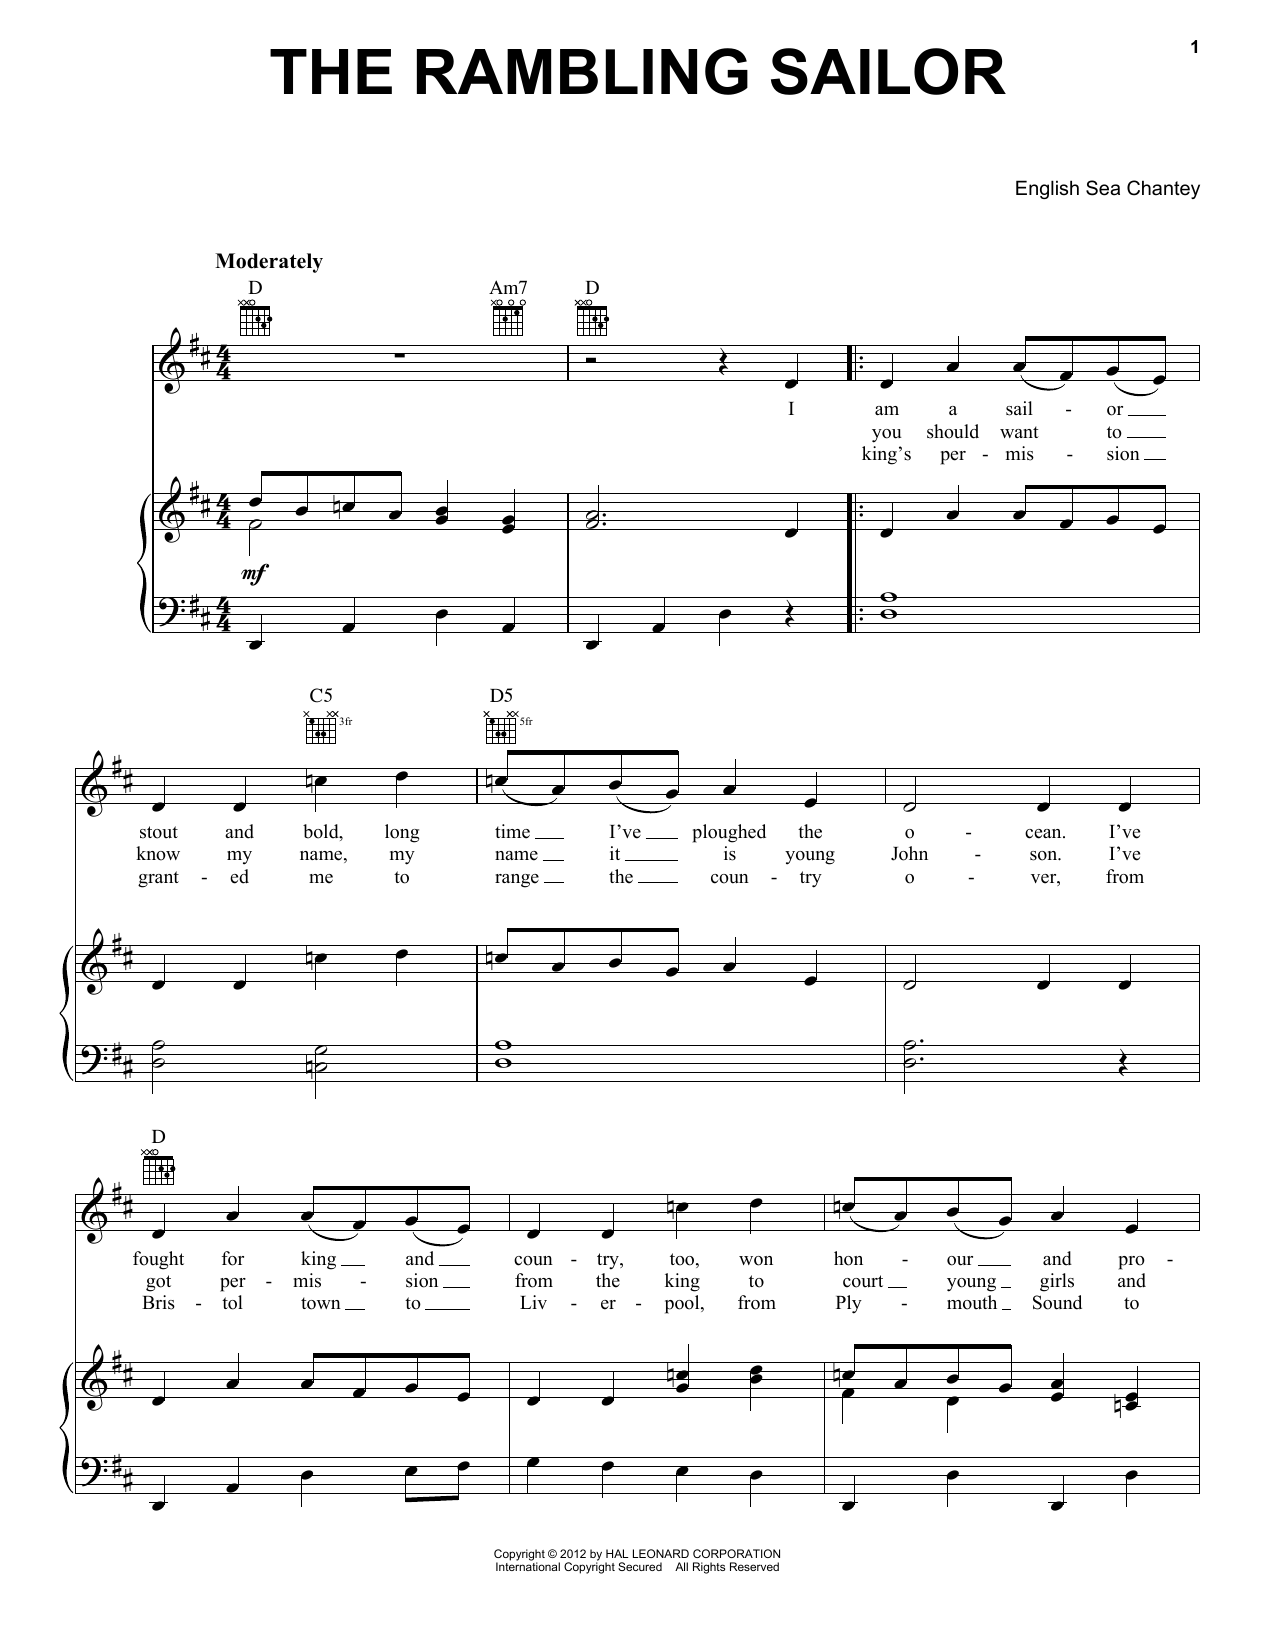 English Sea Chantey The Rambling Sailor sheet music notes and chords arranged for Lead Sheet / Fake Book